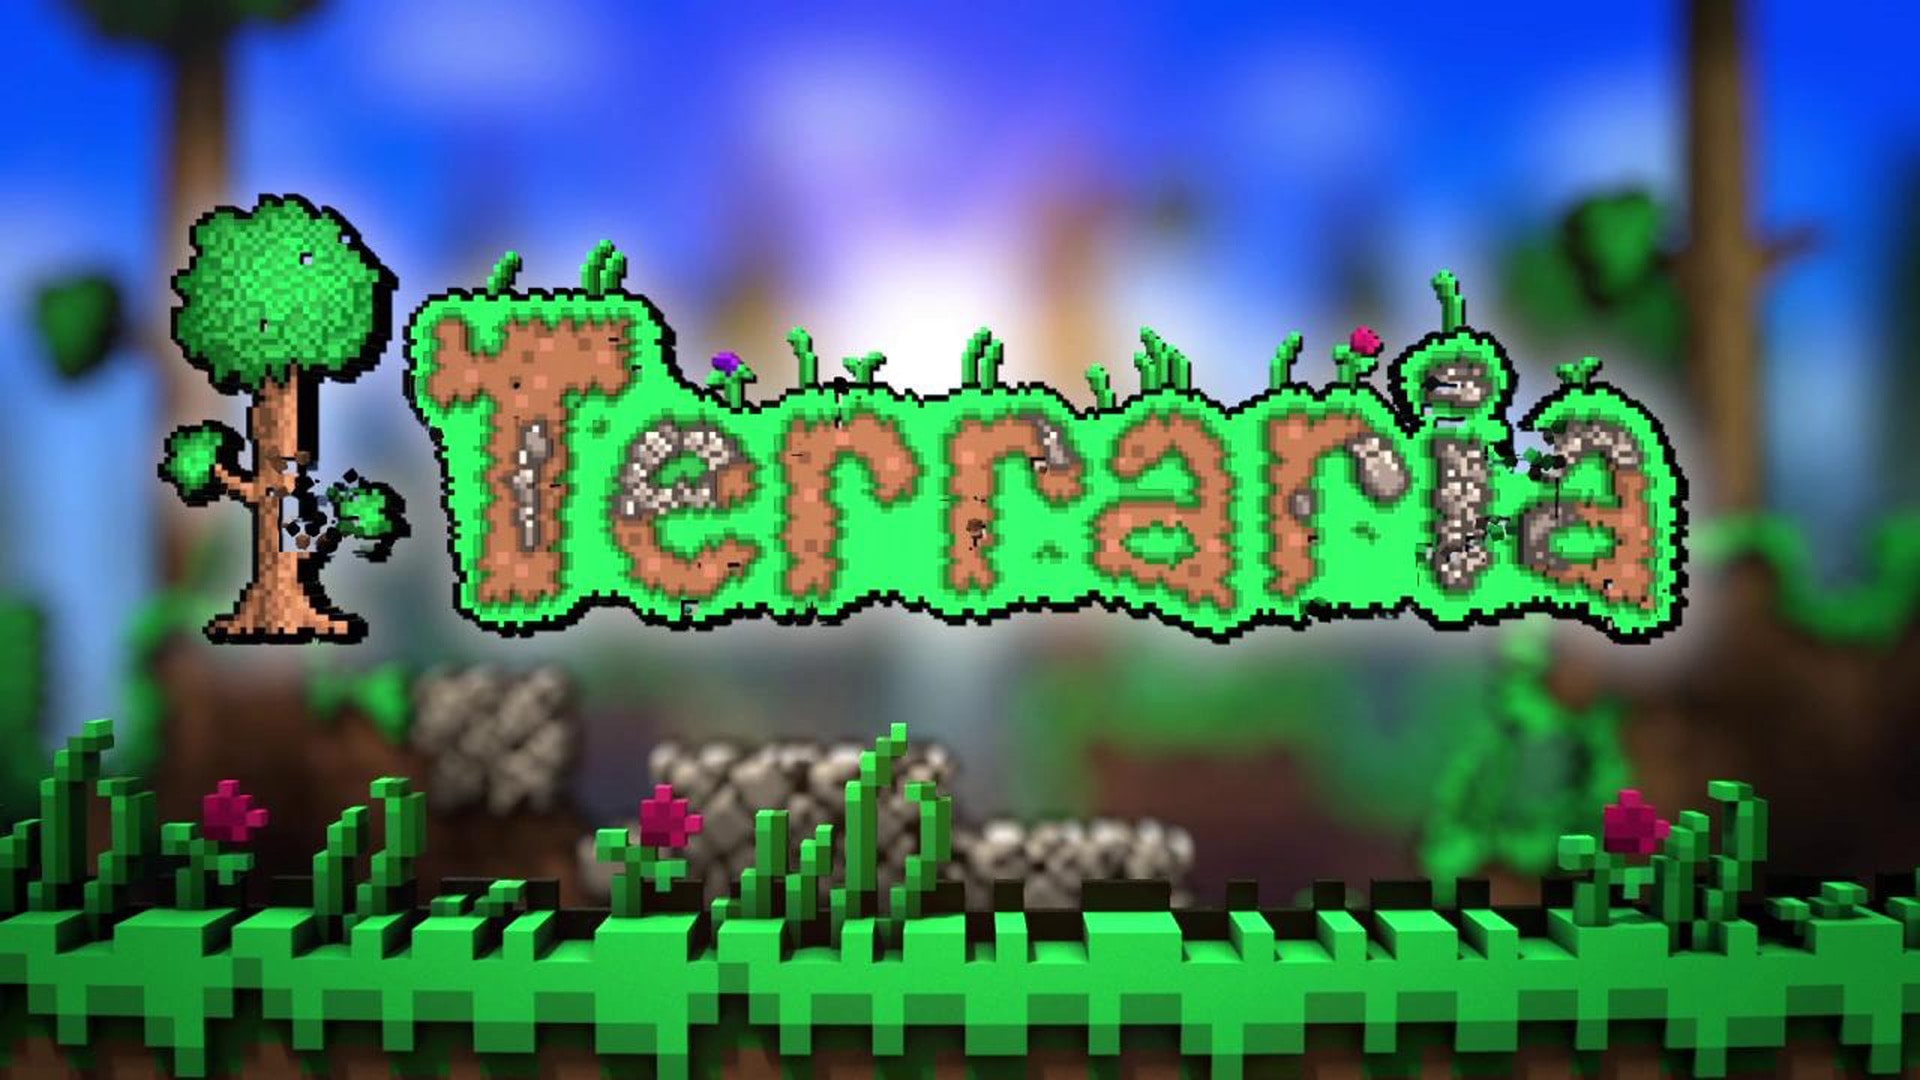 In-game screenshot of Terraria showcasing its pixelated sandbox world